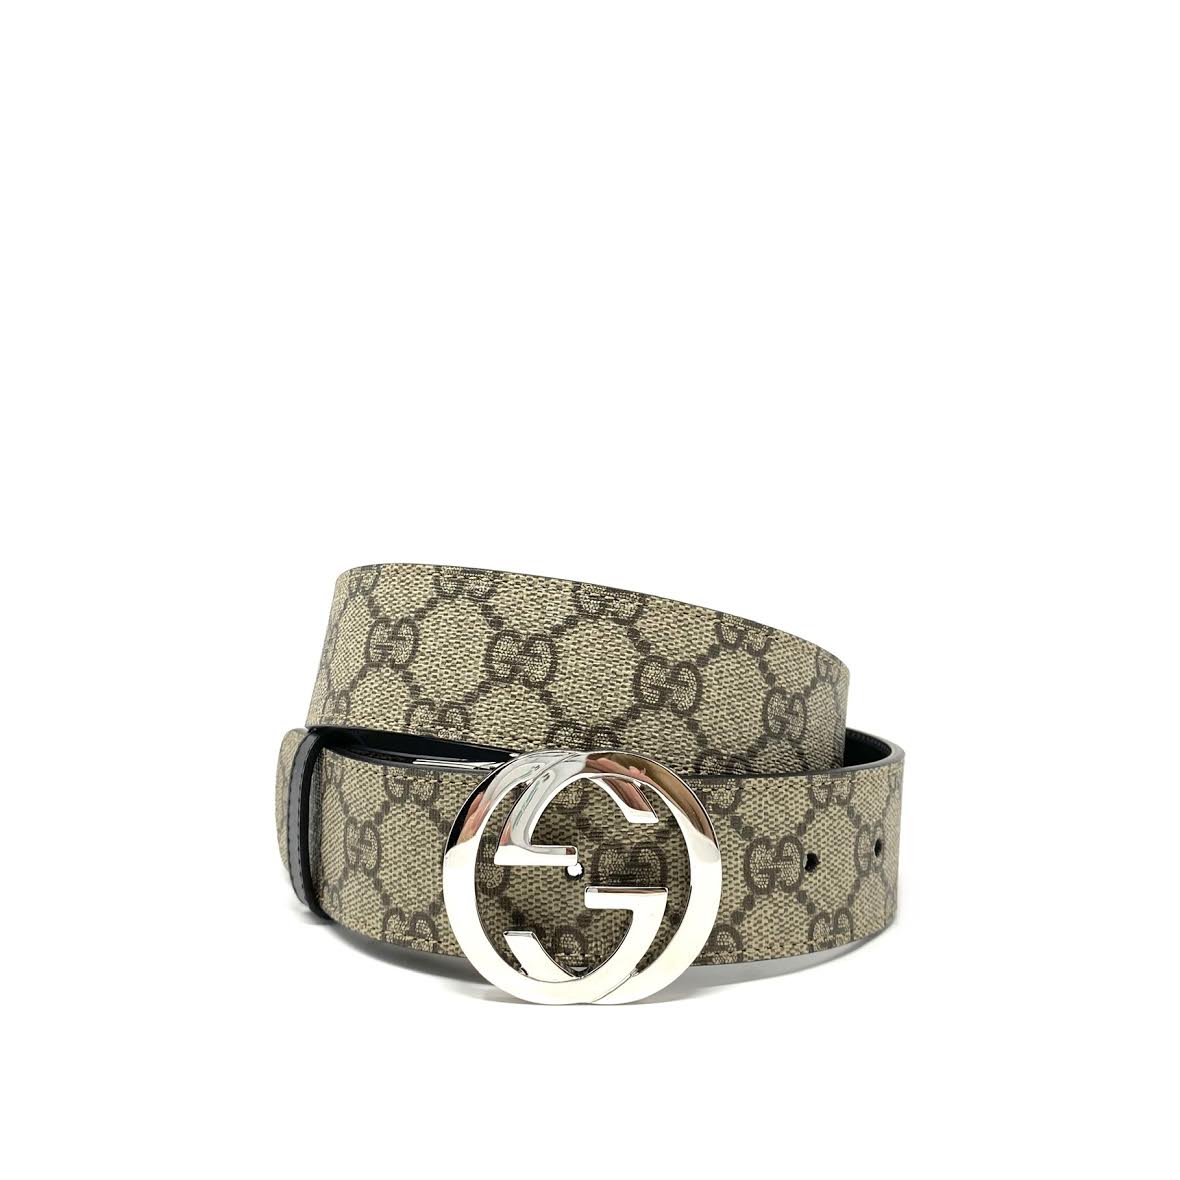 Copy of Gucci Reversible GG Supreme Belt w/ Interlocking G - Size 38